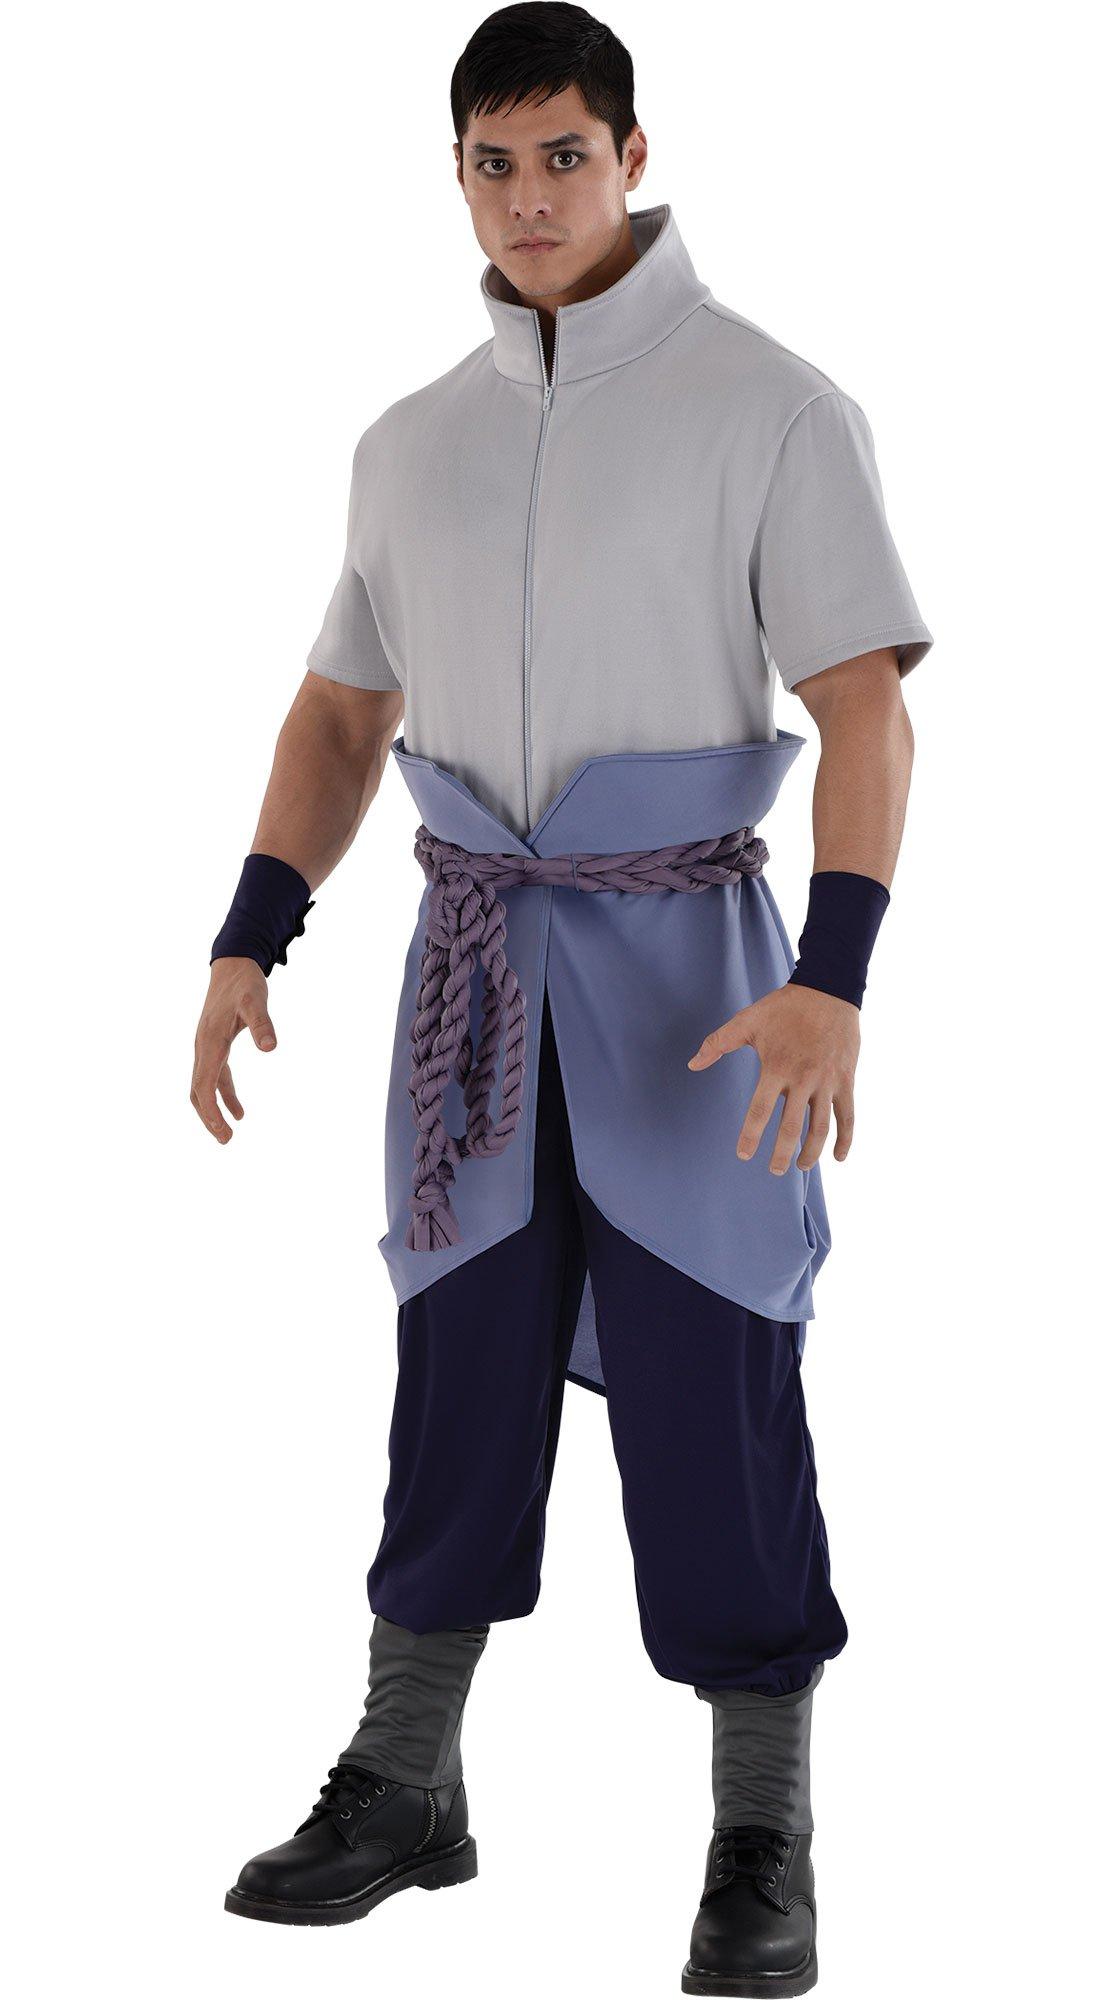 Adult Sasuke Costume - Naruto Shippuden